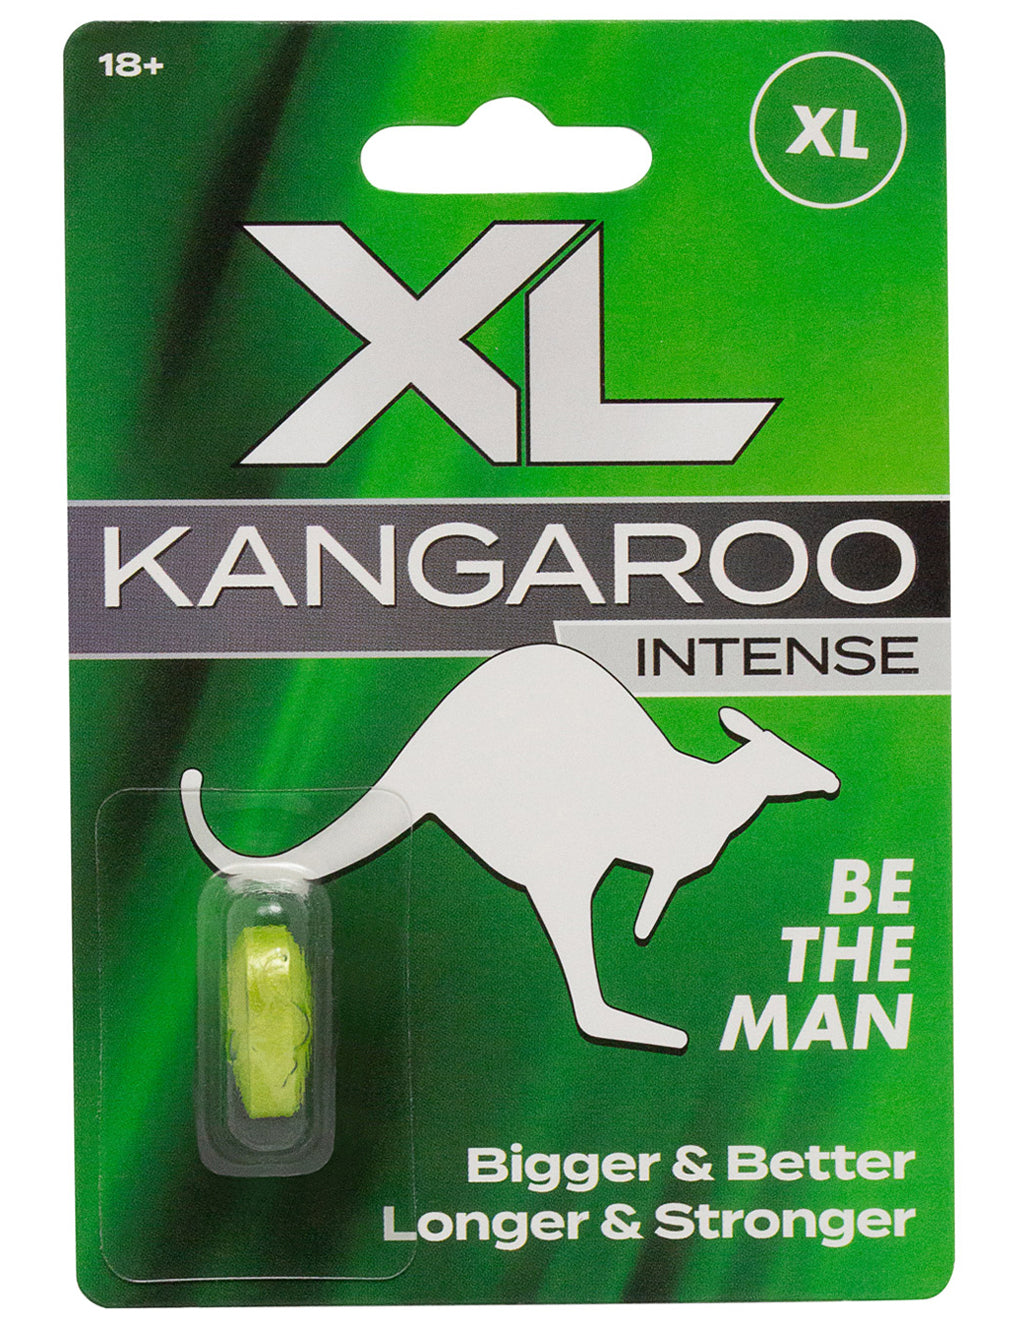 Kangaroo XL Intense- 1 Count- Front